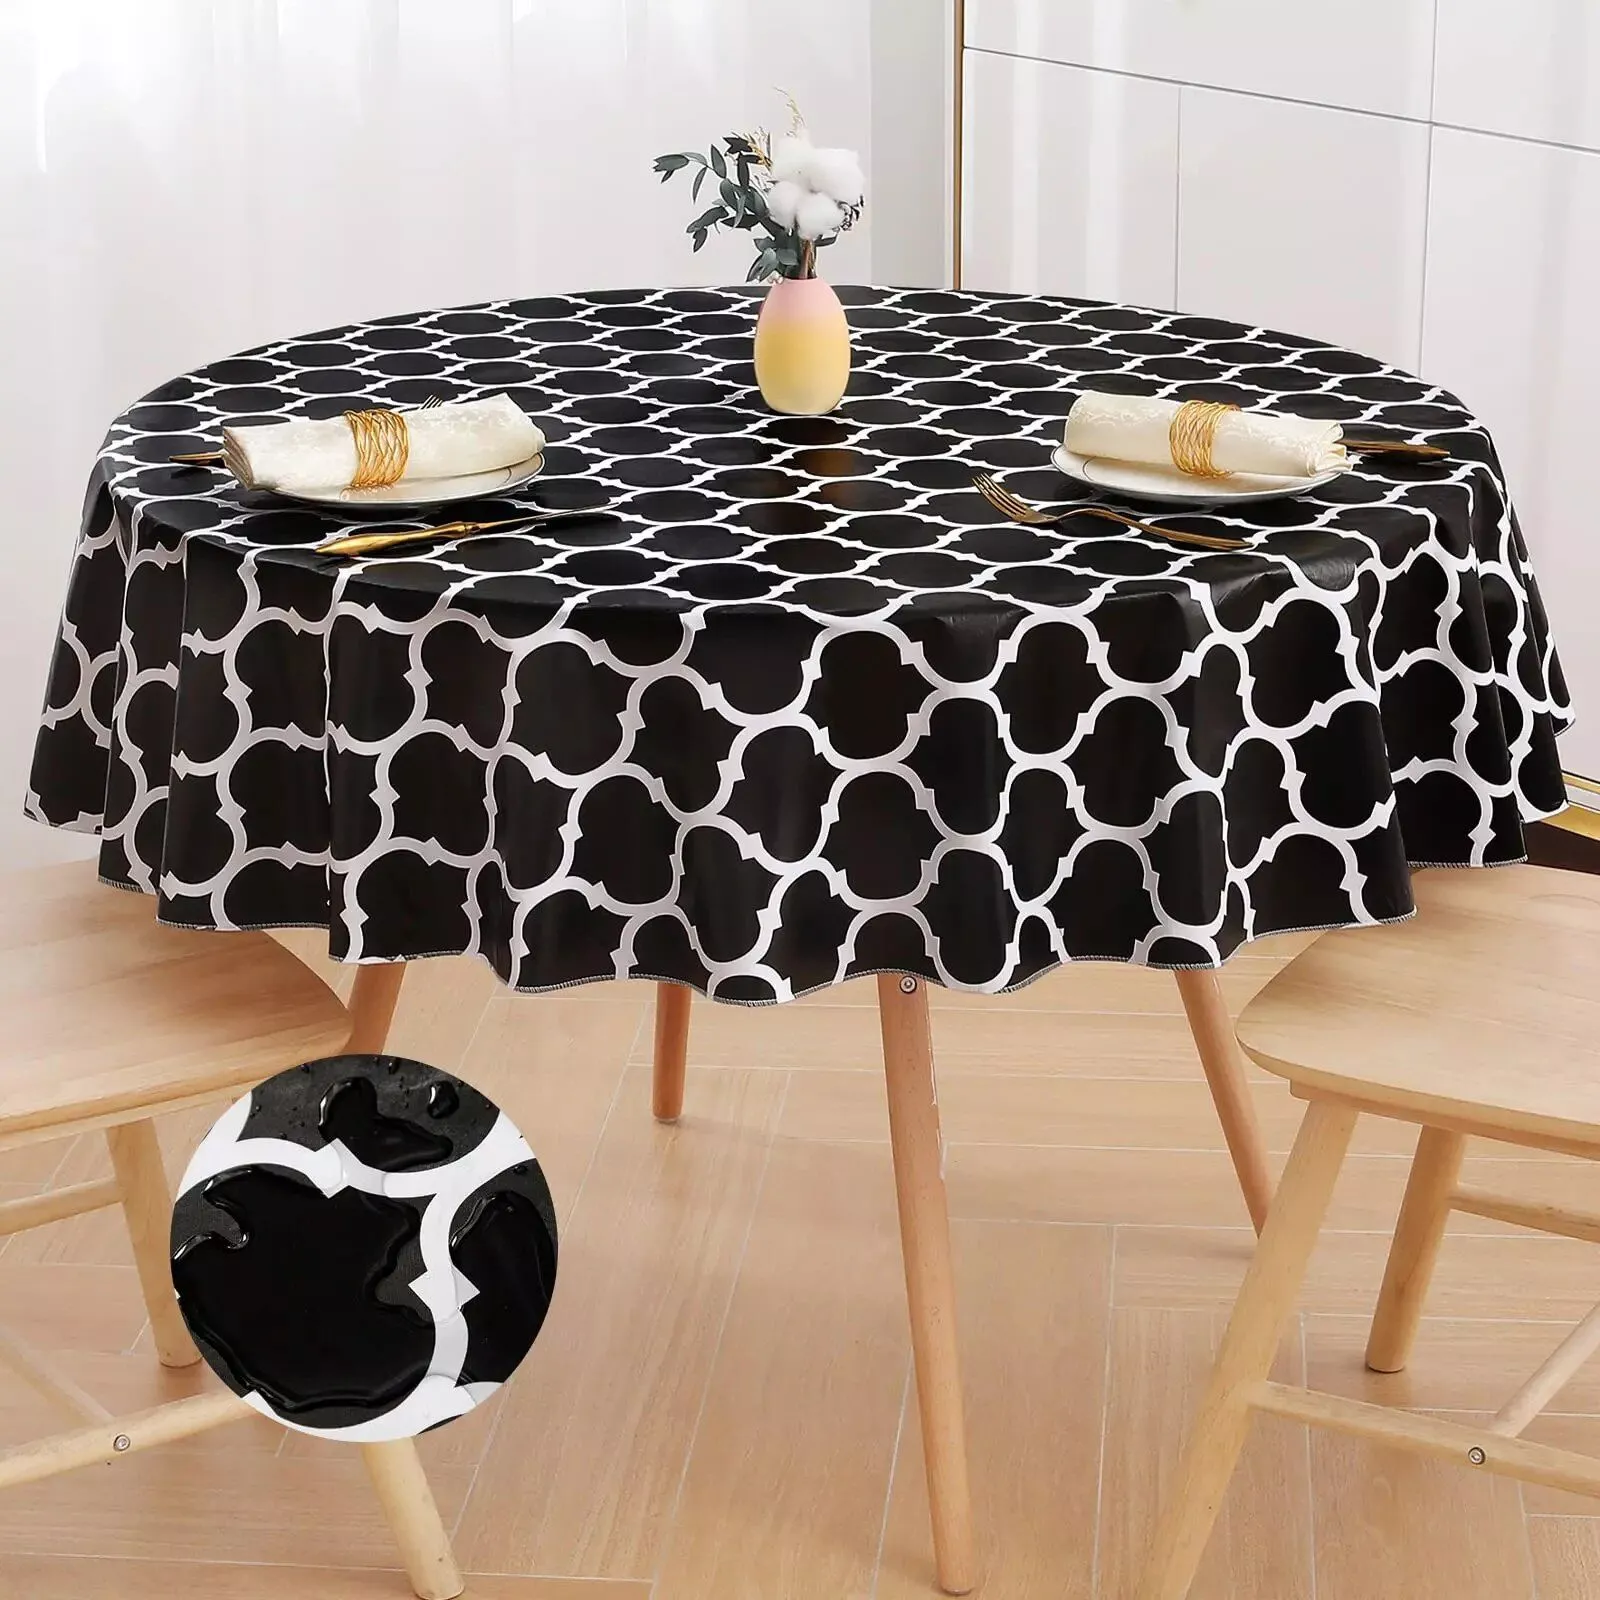 Elegant Round Moroccan Tablecloth